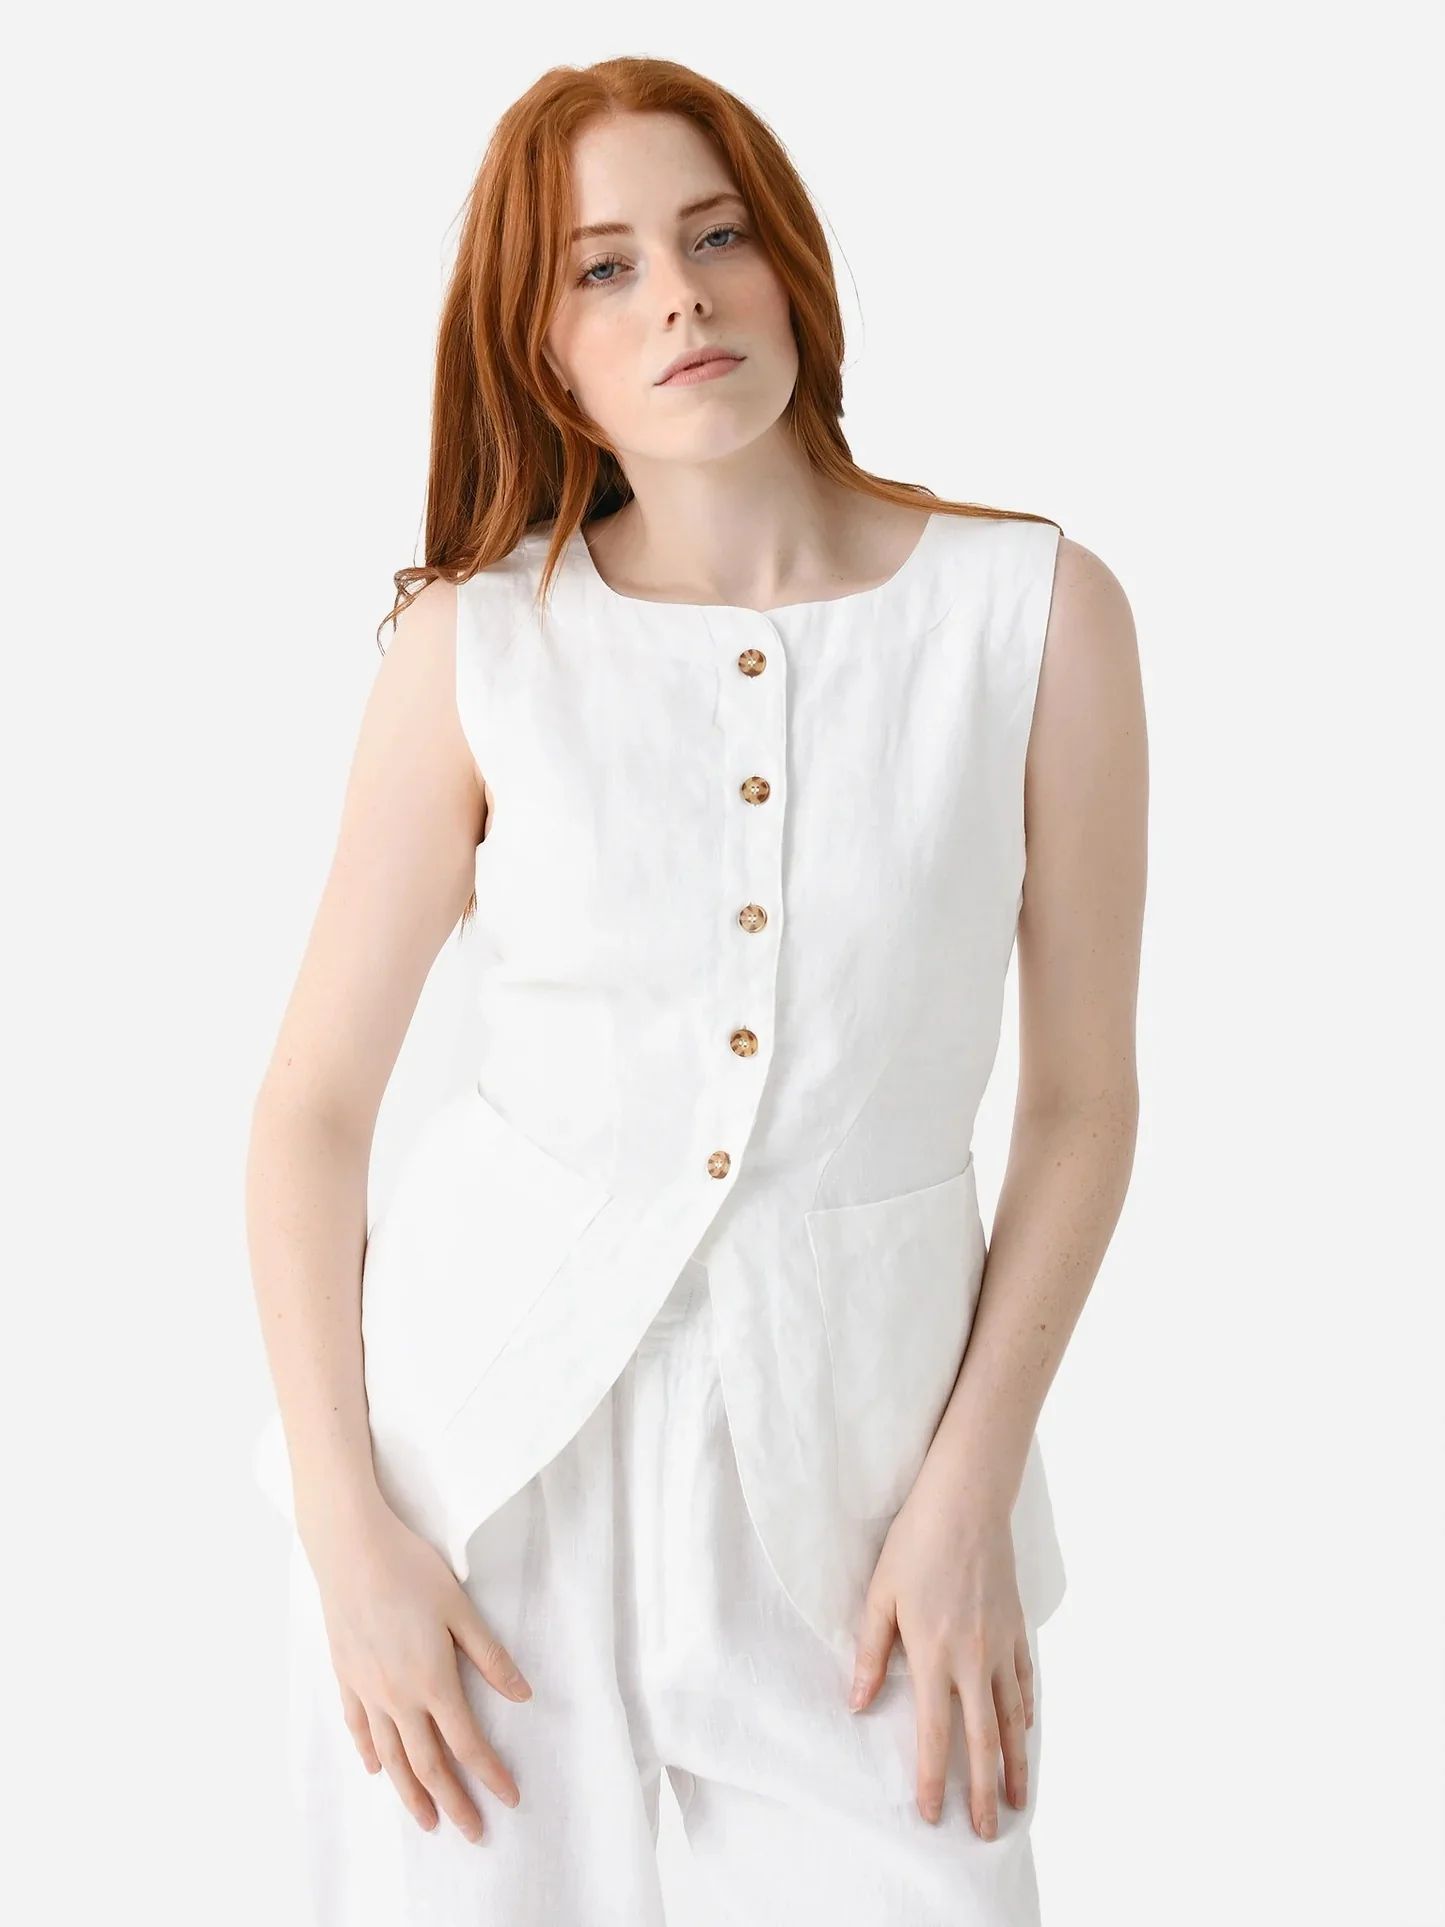 POSSE
                      
                     Women's Emma Vest | Saint Bernard